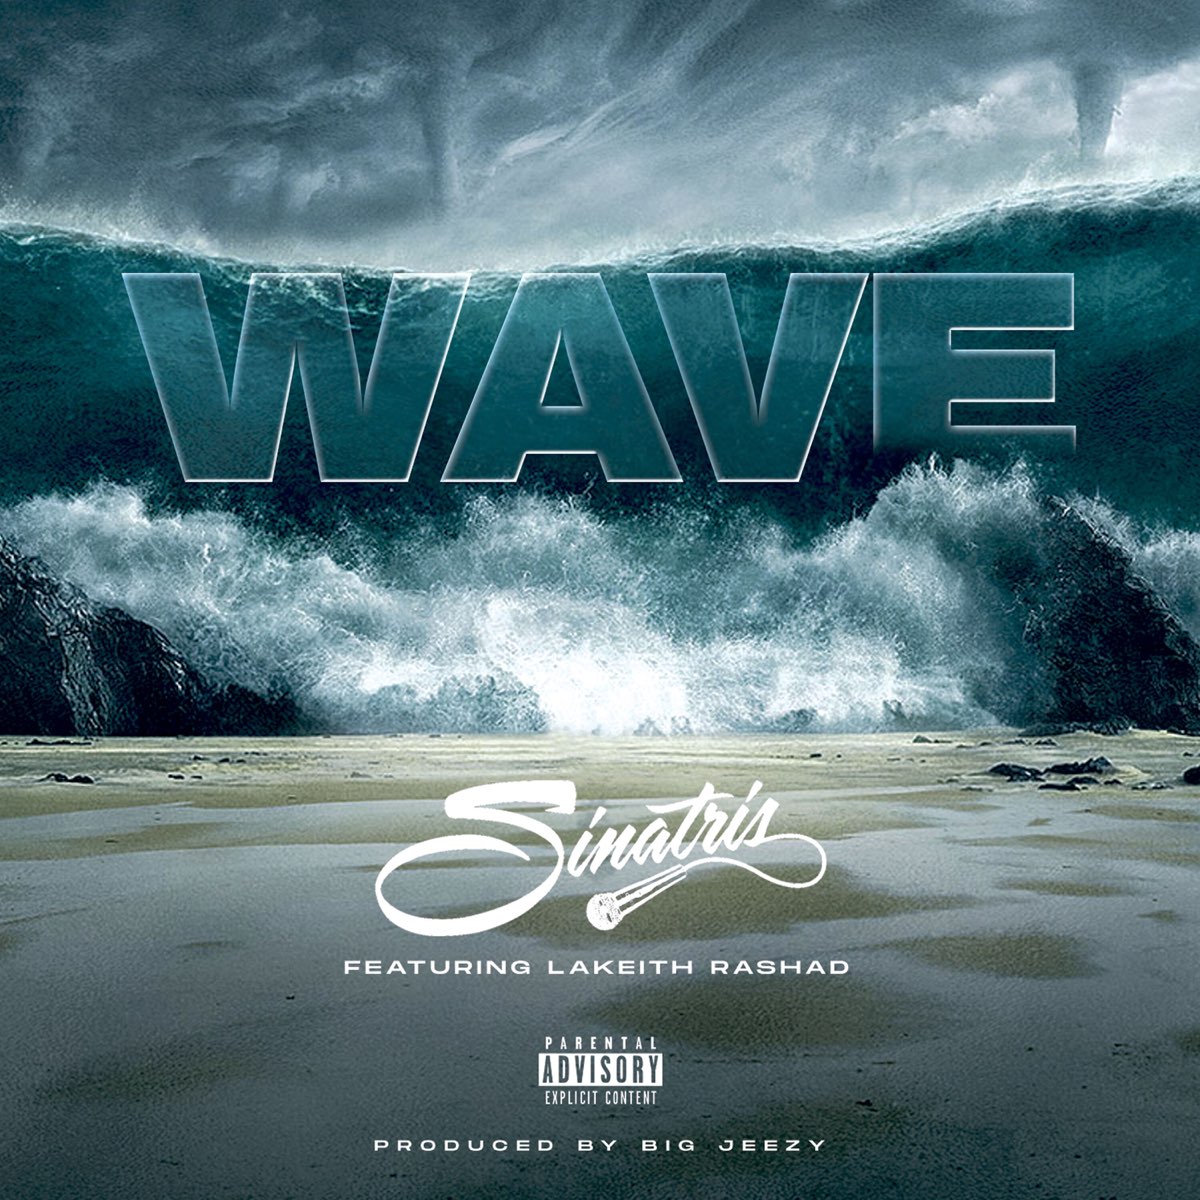 Waves feat. Wave песня.